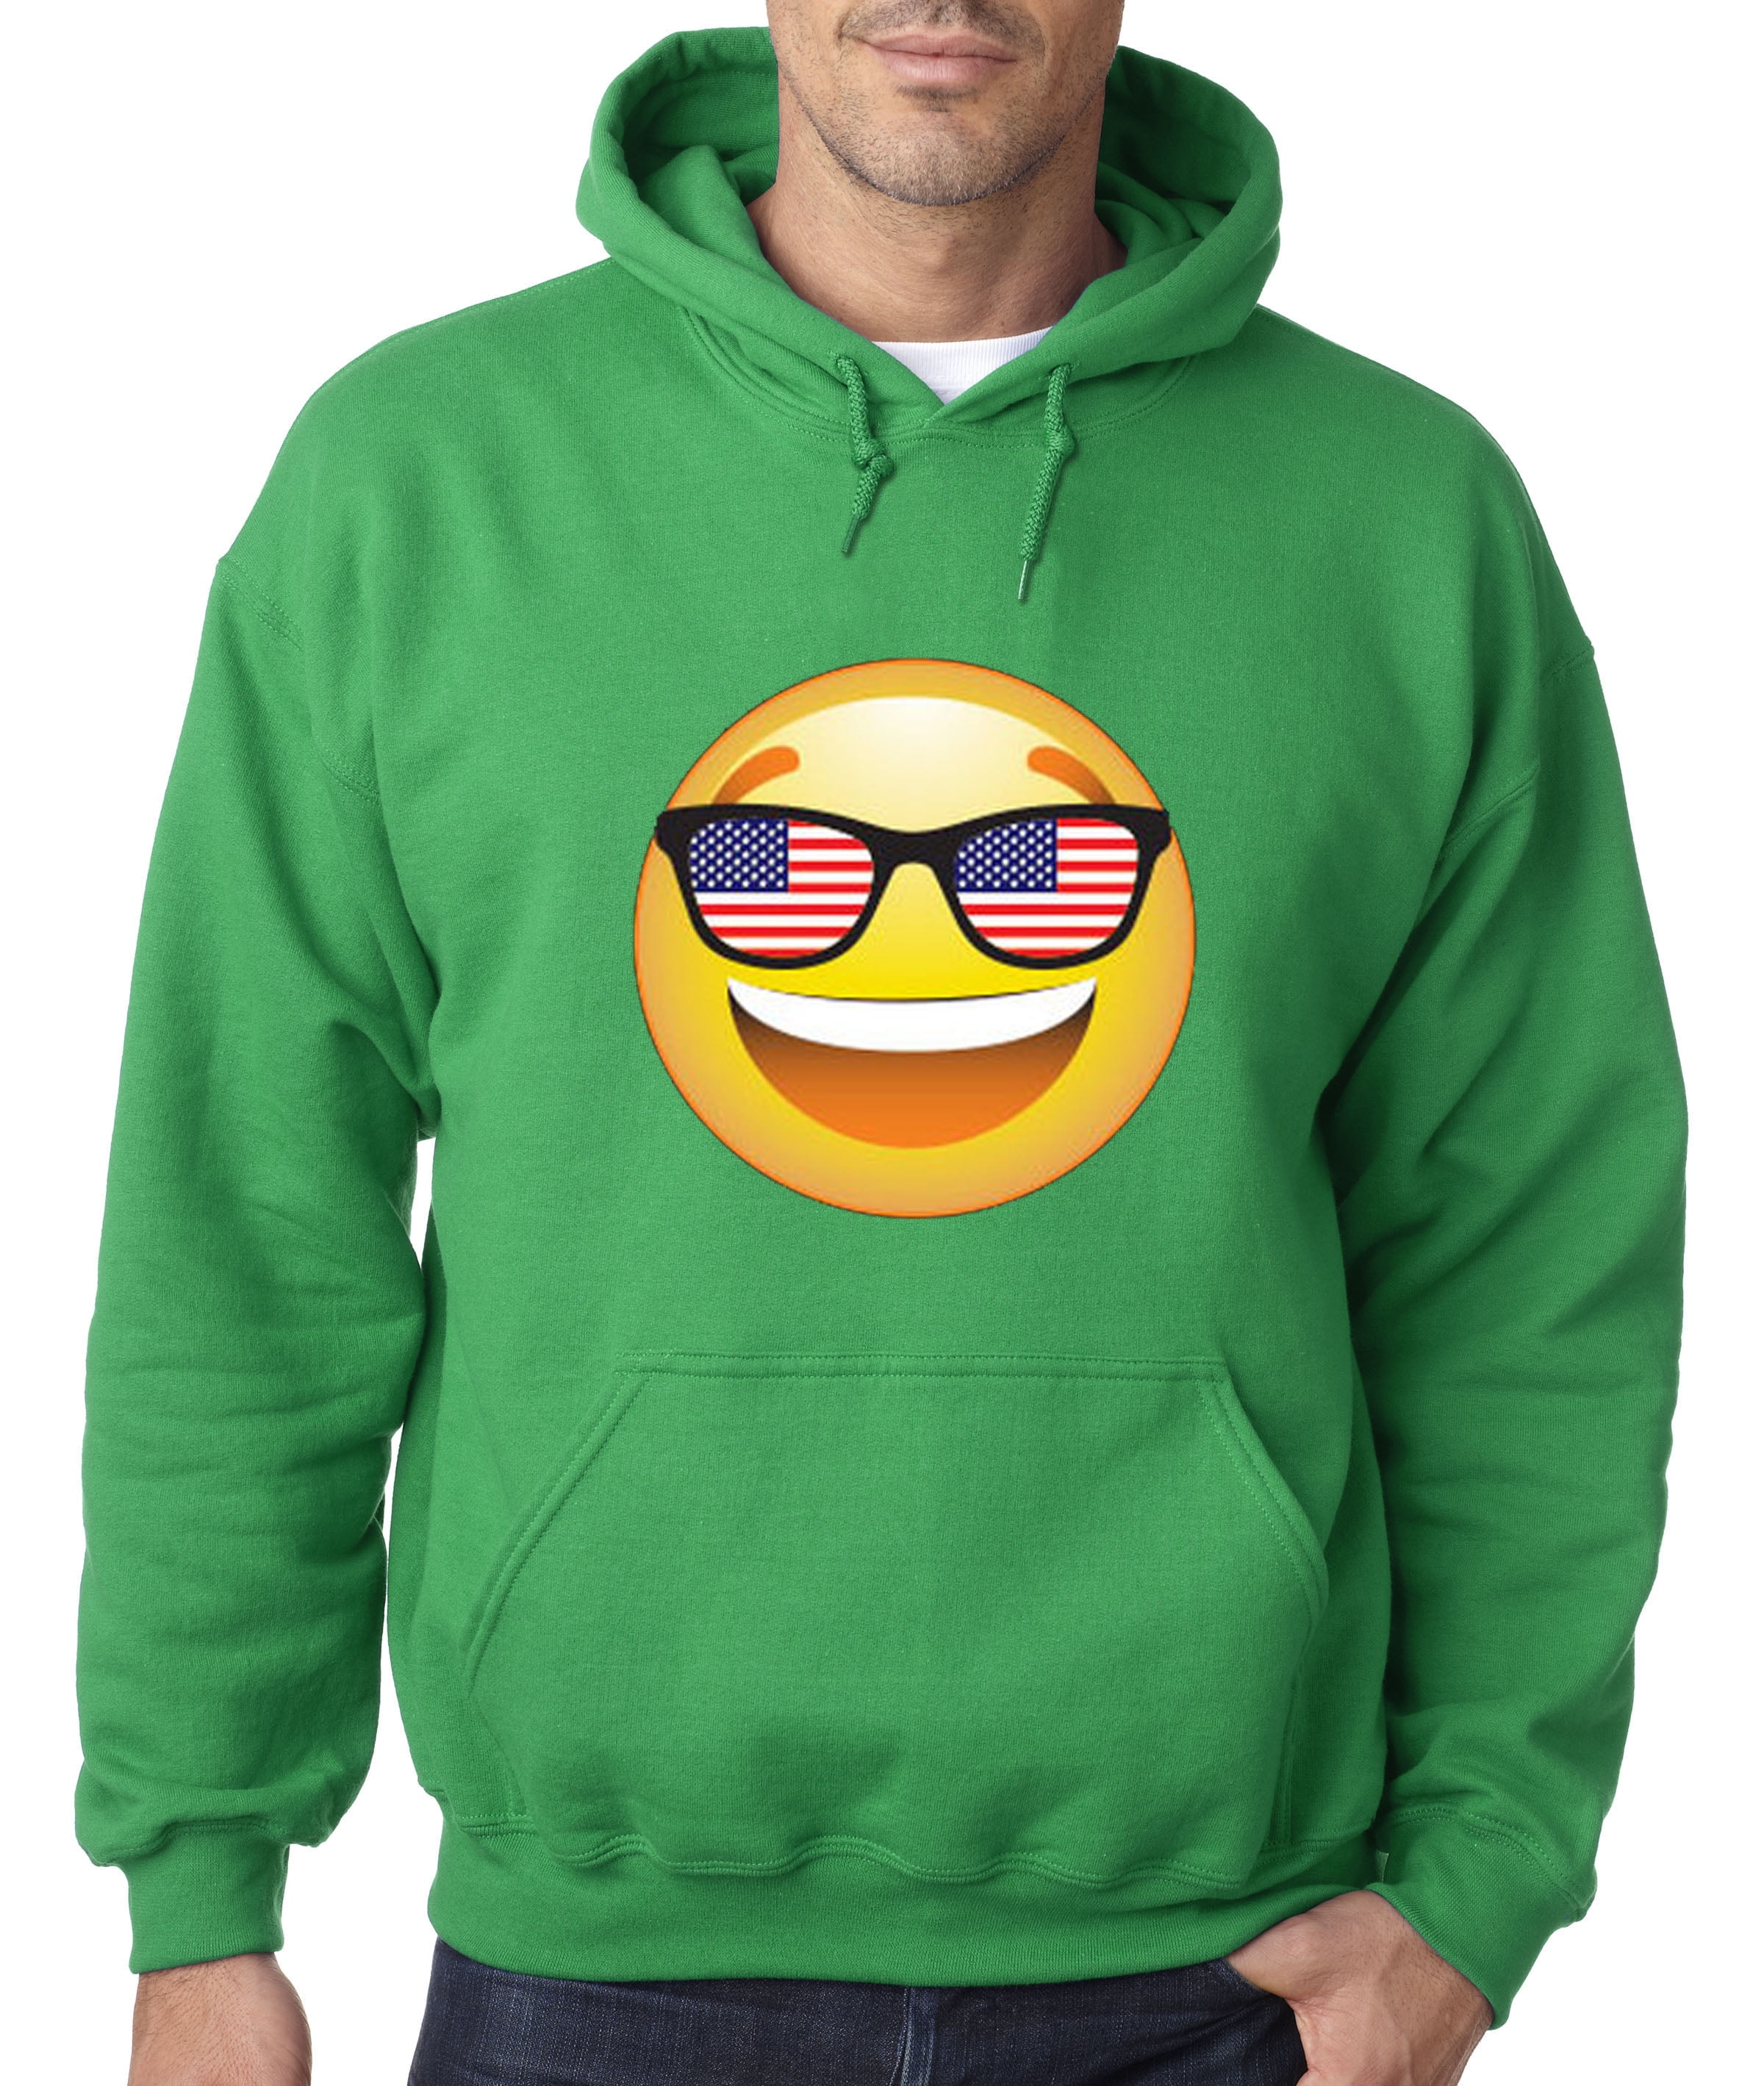 Emoticon Sunglasses Smile Face Tie-Dye Adult Hoodie Sweatshirt